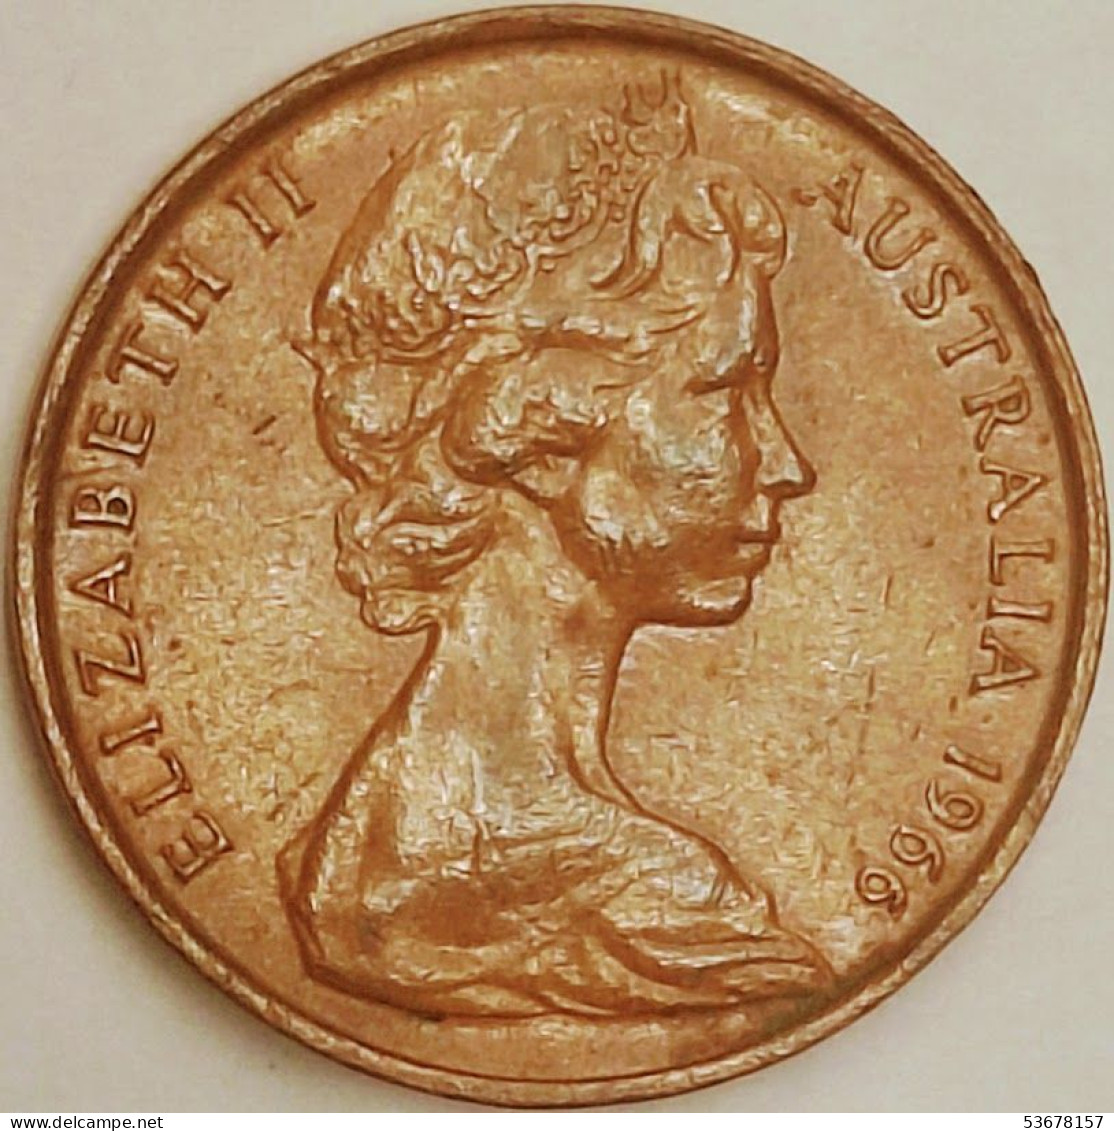 Australia - 2 Cents 1966, KM# 63 (#2793) - 2 Cents